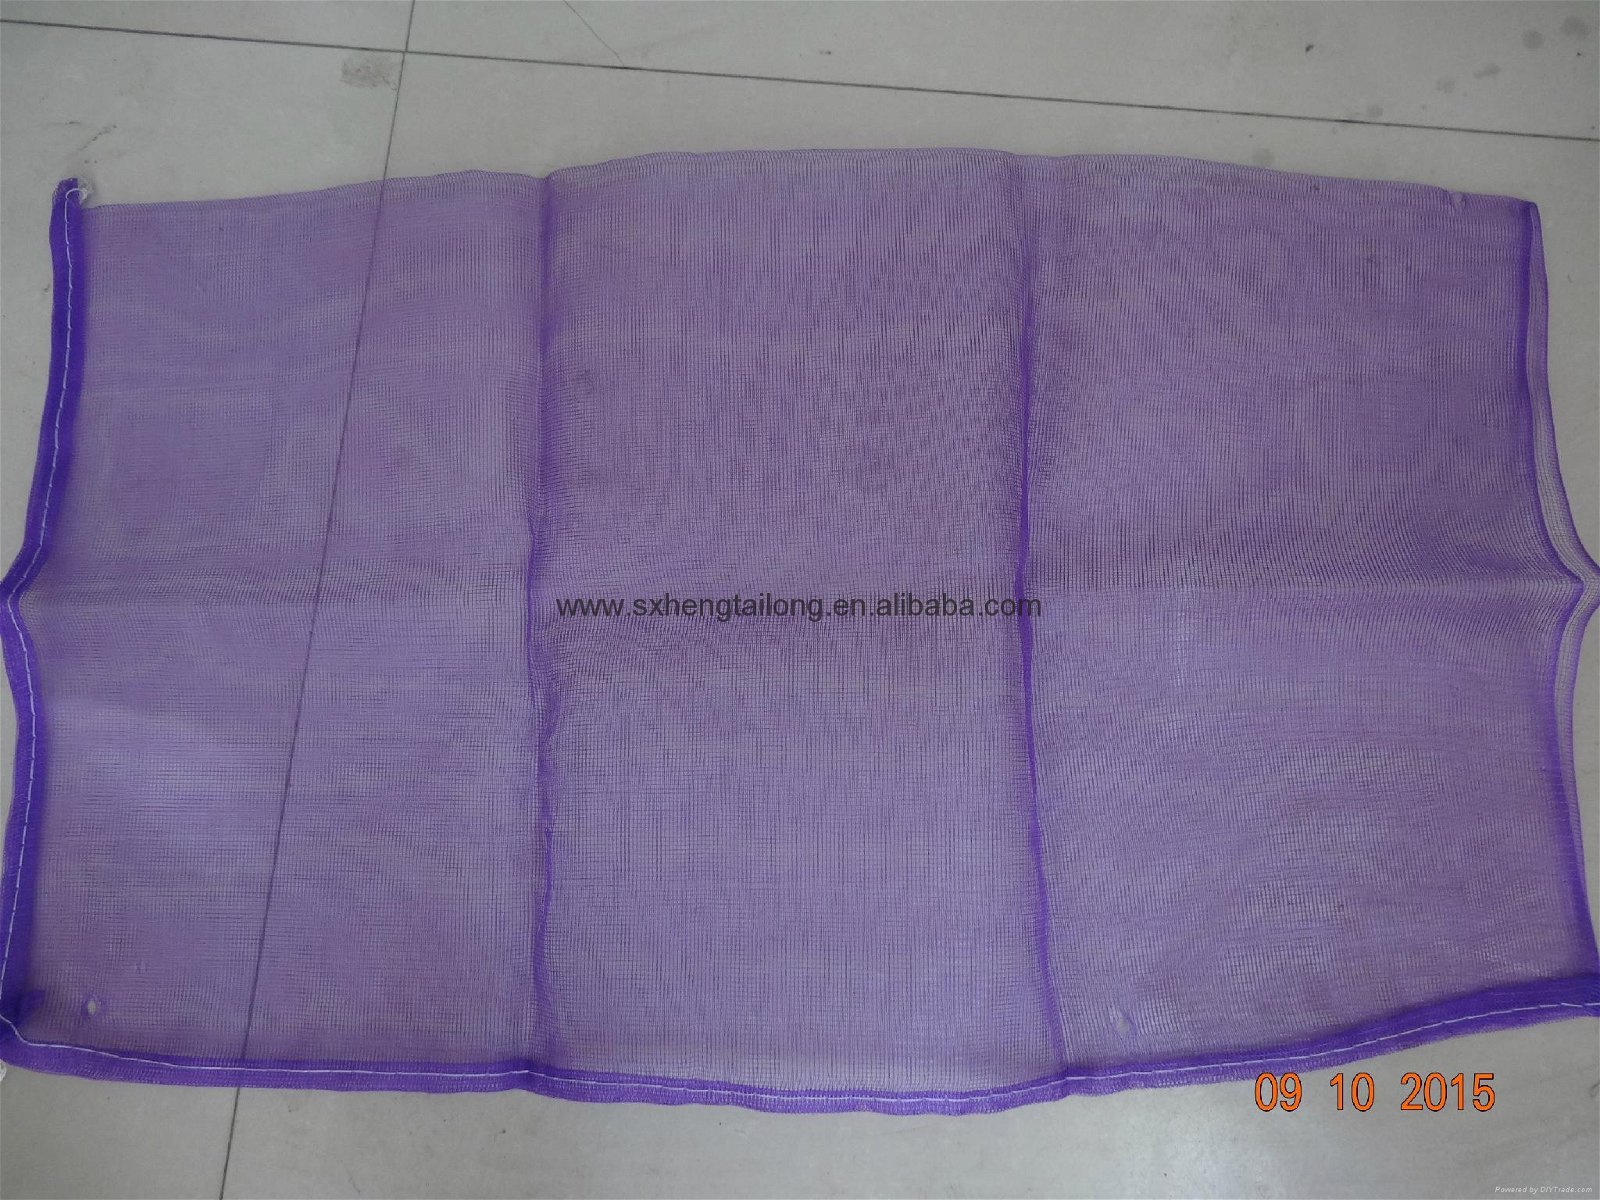 Purple pe mesh bags for packaging garlic 